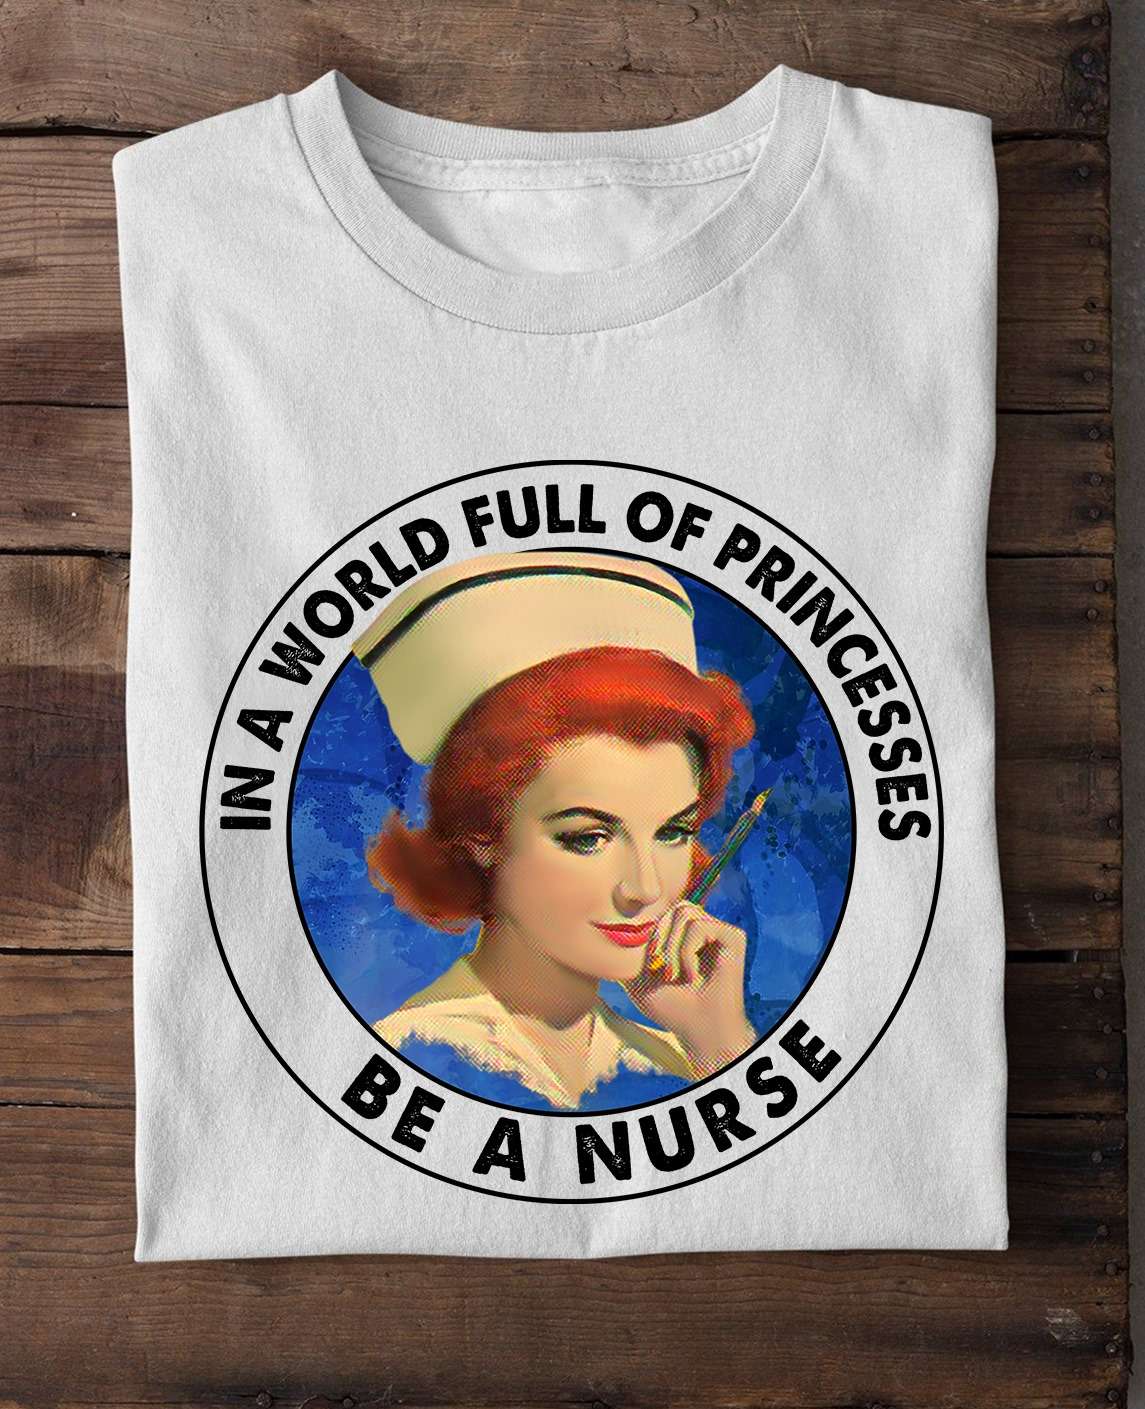 In a world full of princesses be a nurse - Beautiful nurse, nursing the job